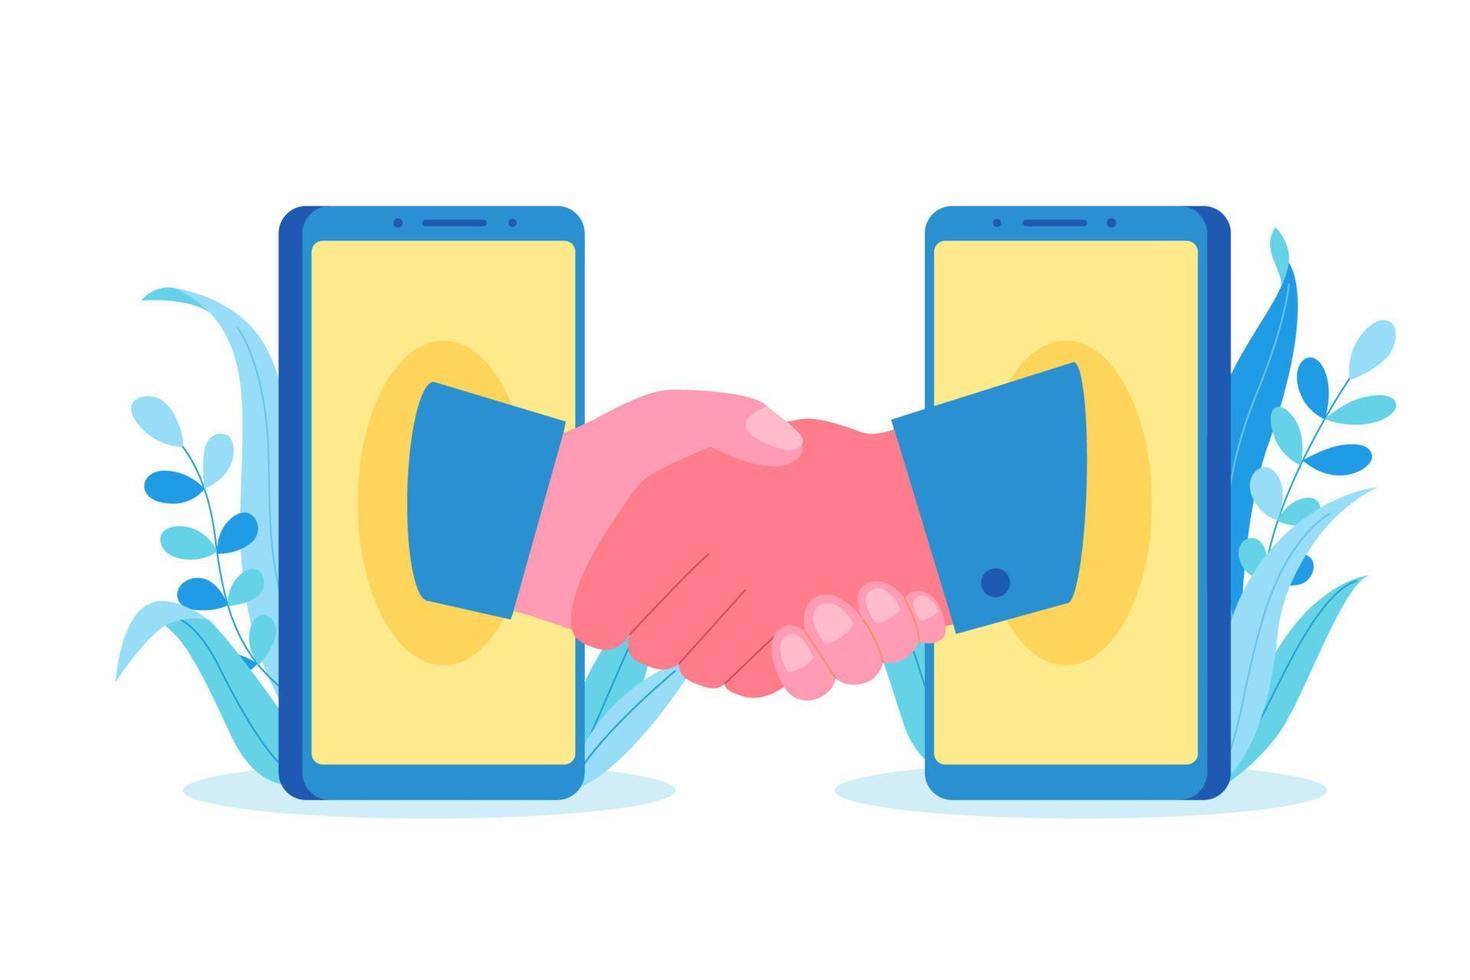 plano ilustración de dos manos sacudida mediante teléfono pantallas concepto de digital negocio camaradería o cooperación. vector